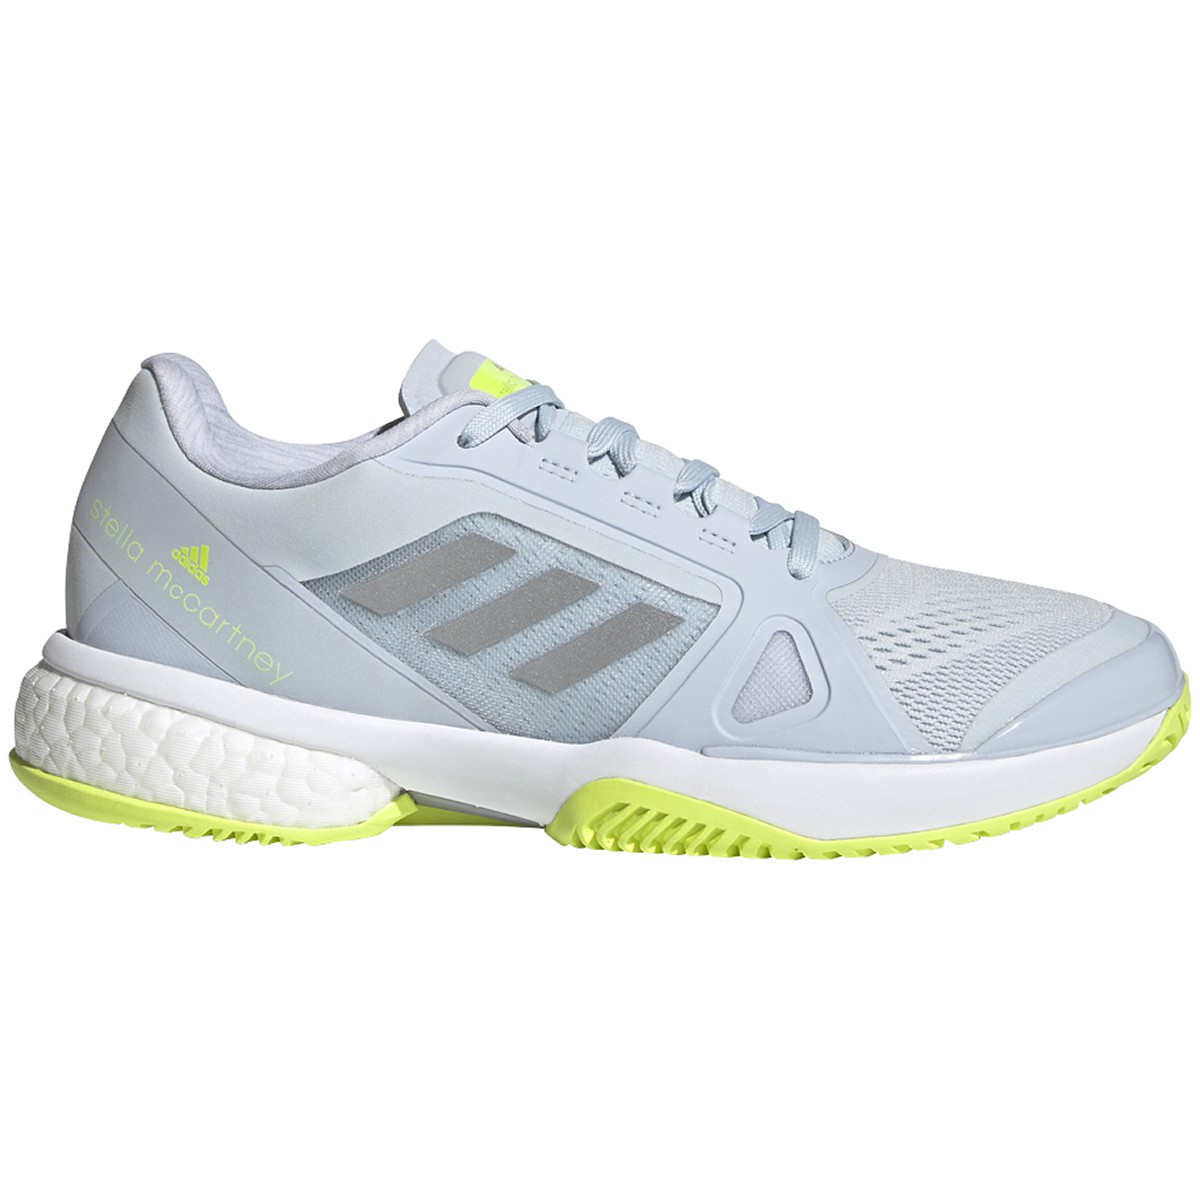 G55659 adidas Women's Stella Boost tennis shoe (Halo Blue/Silver Metallic/Solar Yellow)